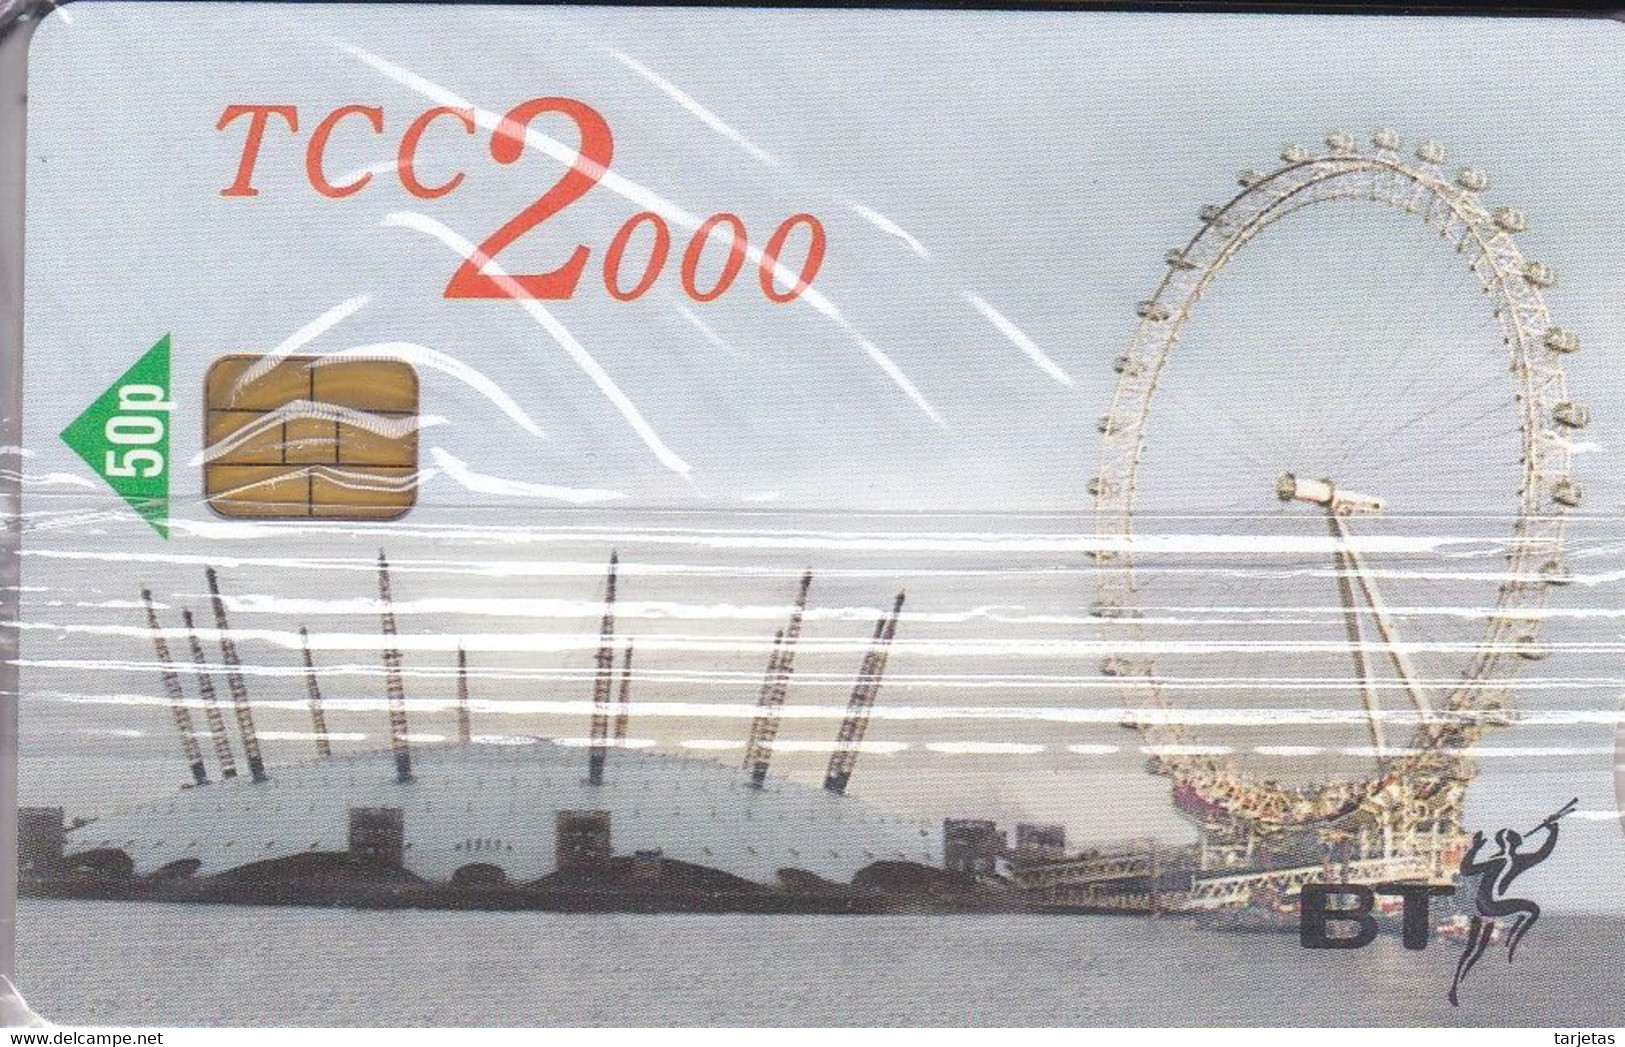 TARJETA DEL REINO UNIDO DE BT TCC 2000 (NUEVA-MINT) NORIA DE LONDRES - BT Promotie